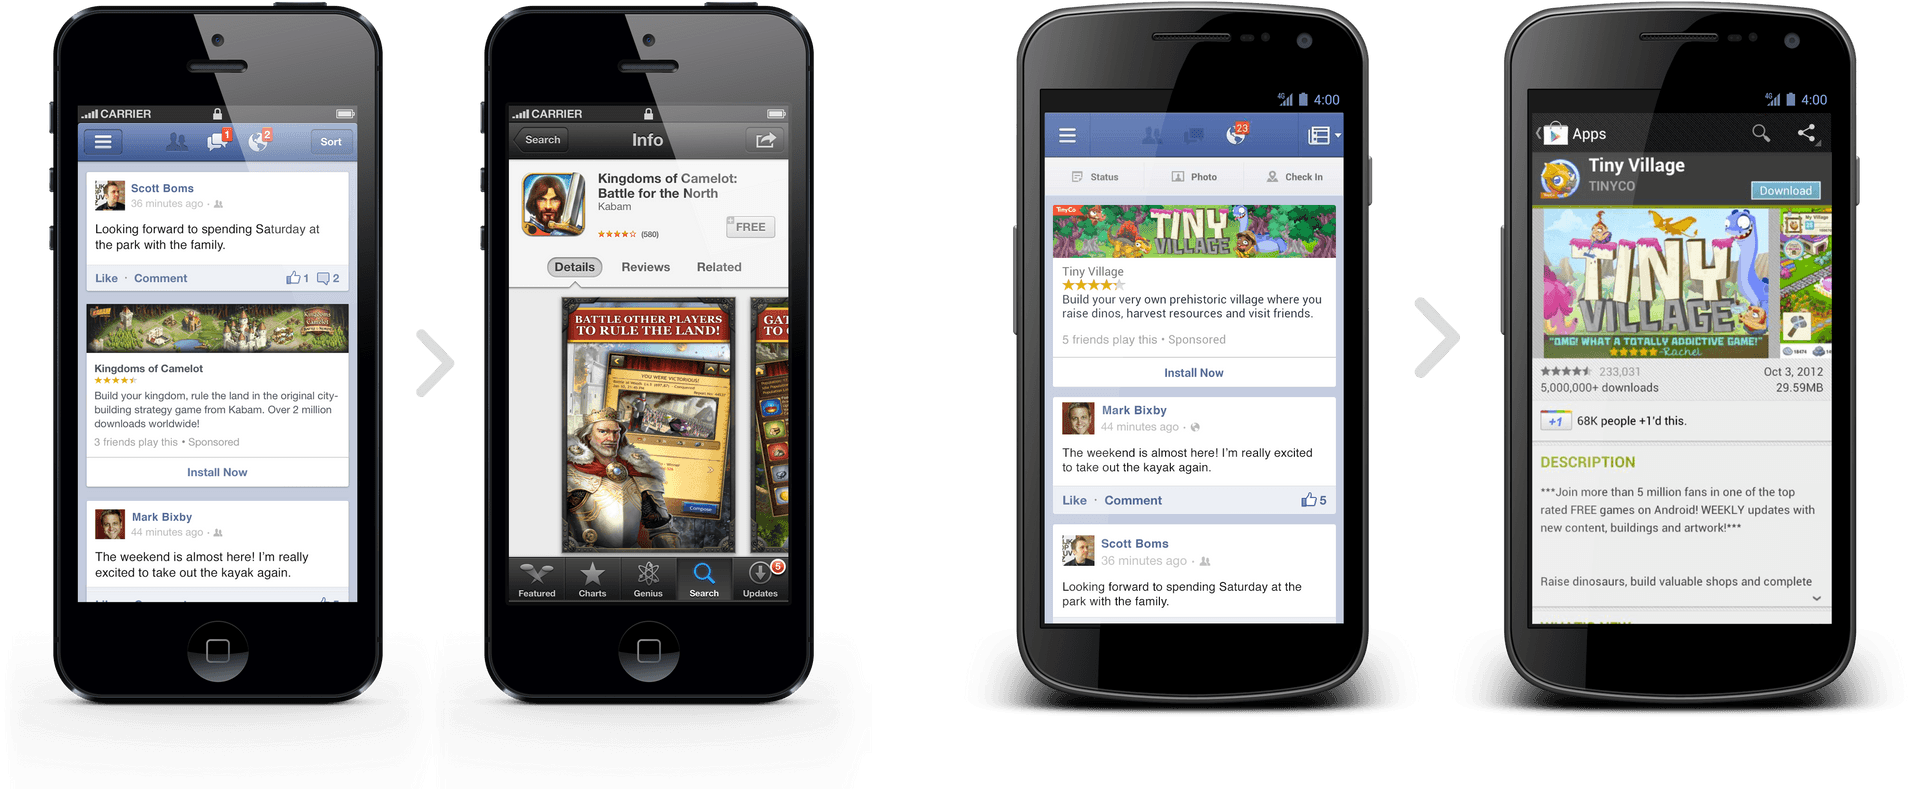 Mobile App Screenshots Display PNG image